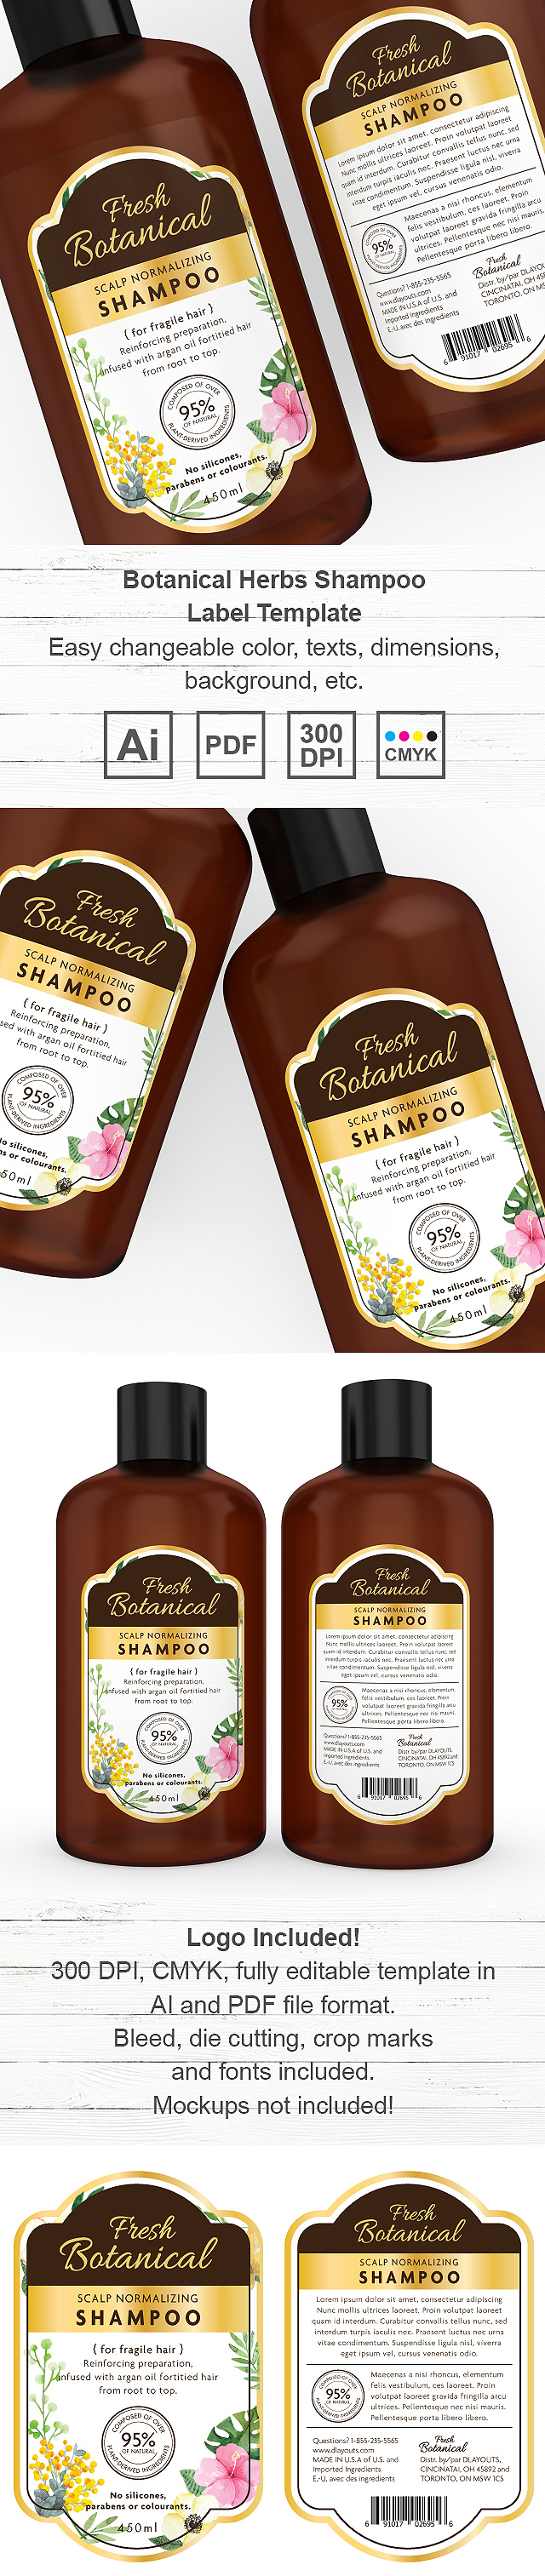 Botanical Herbs Shampoo Label Template